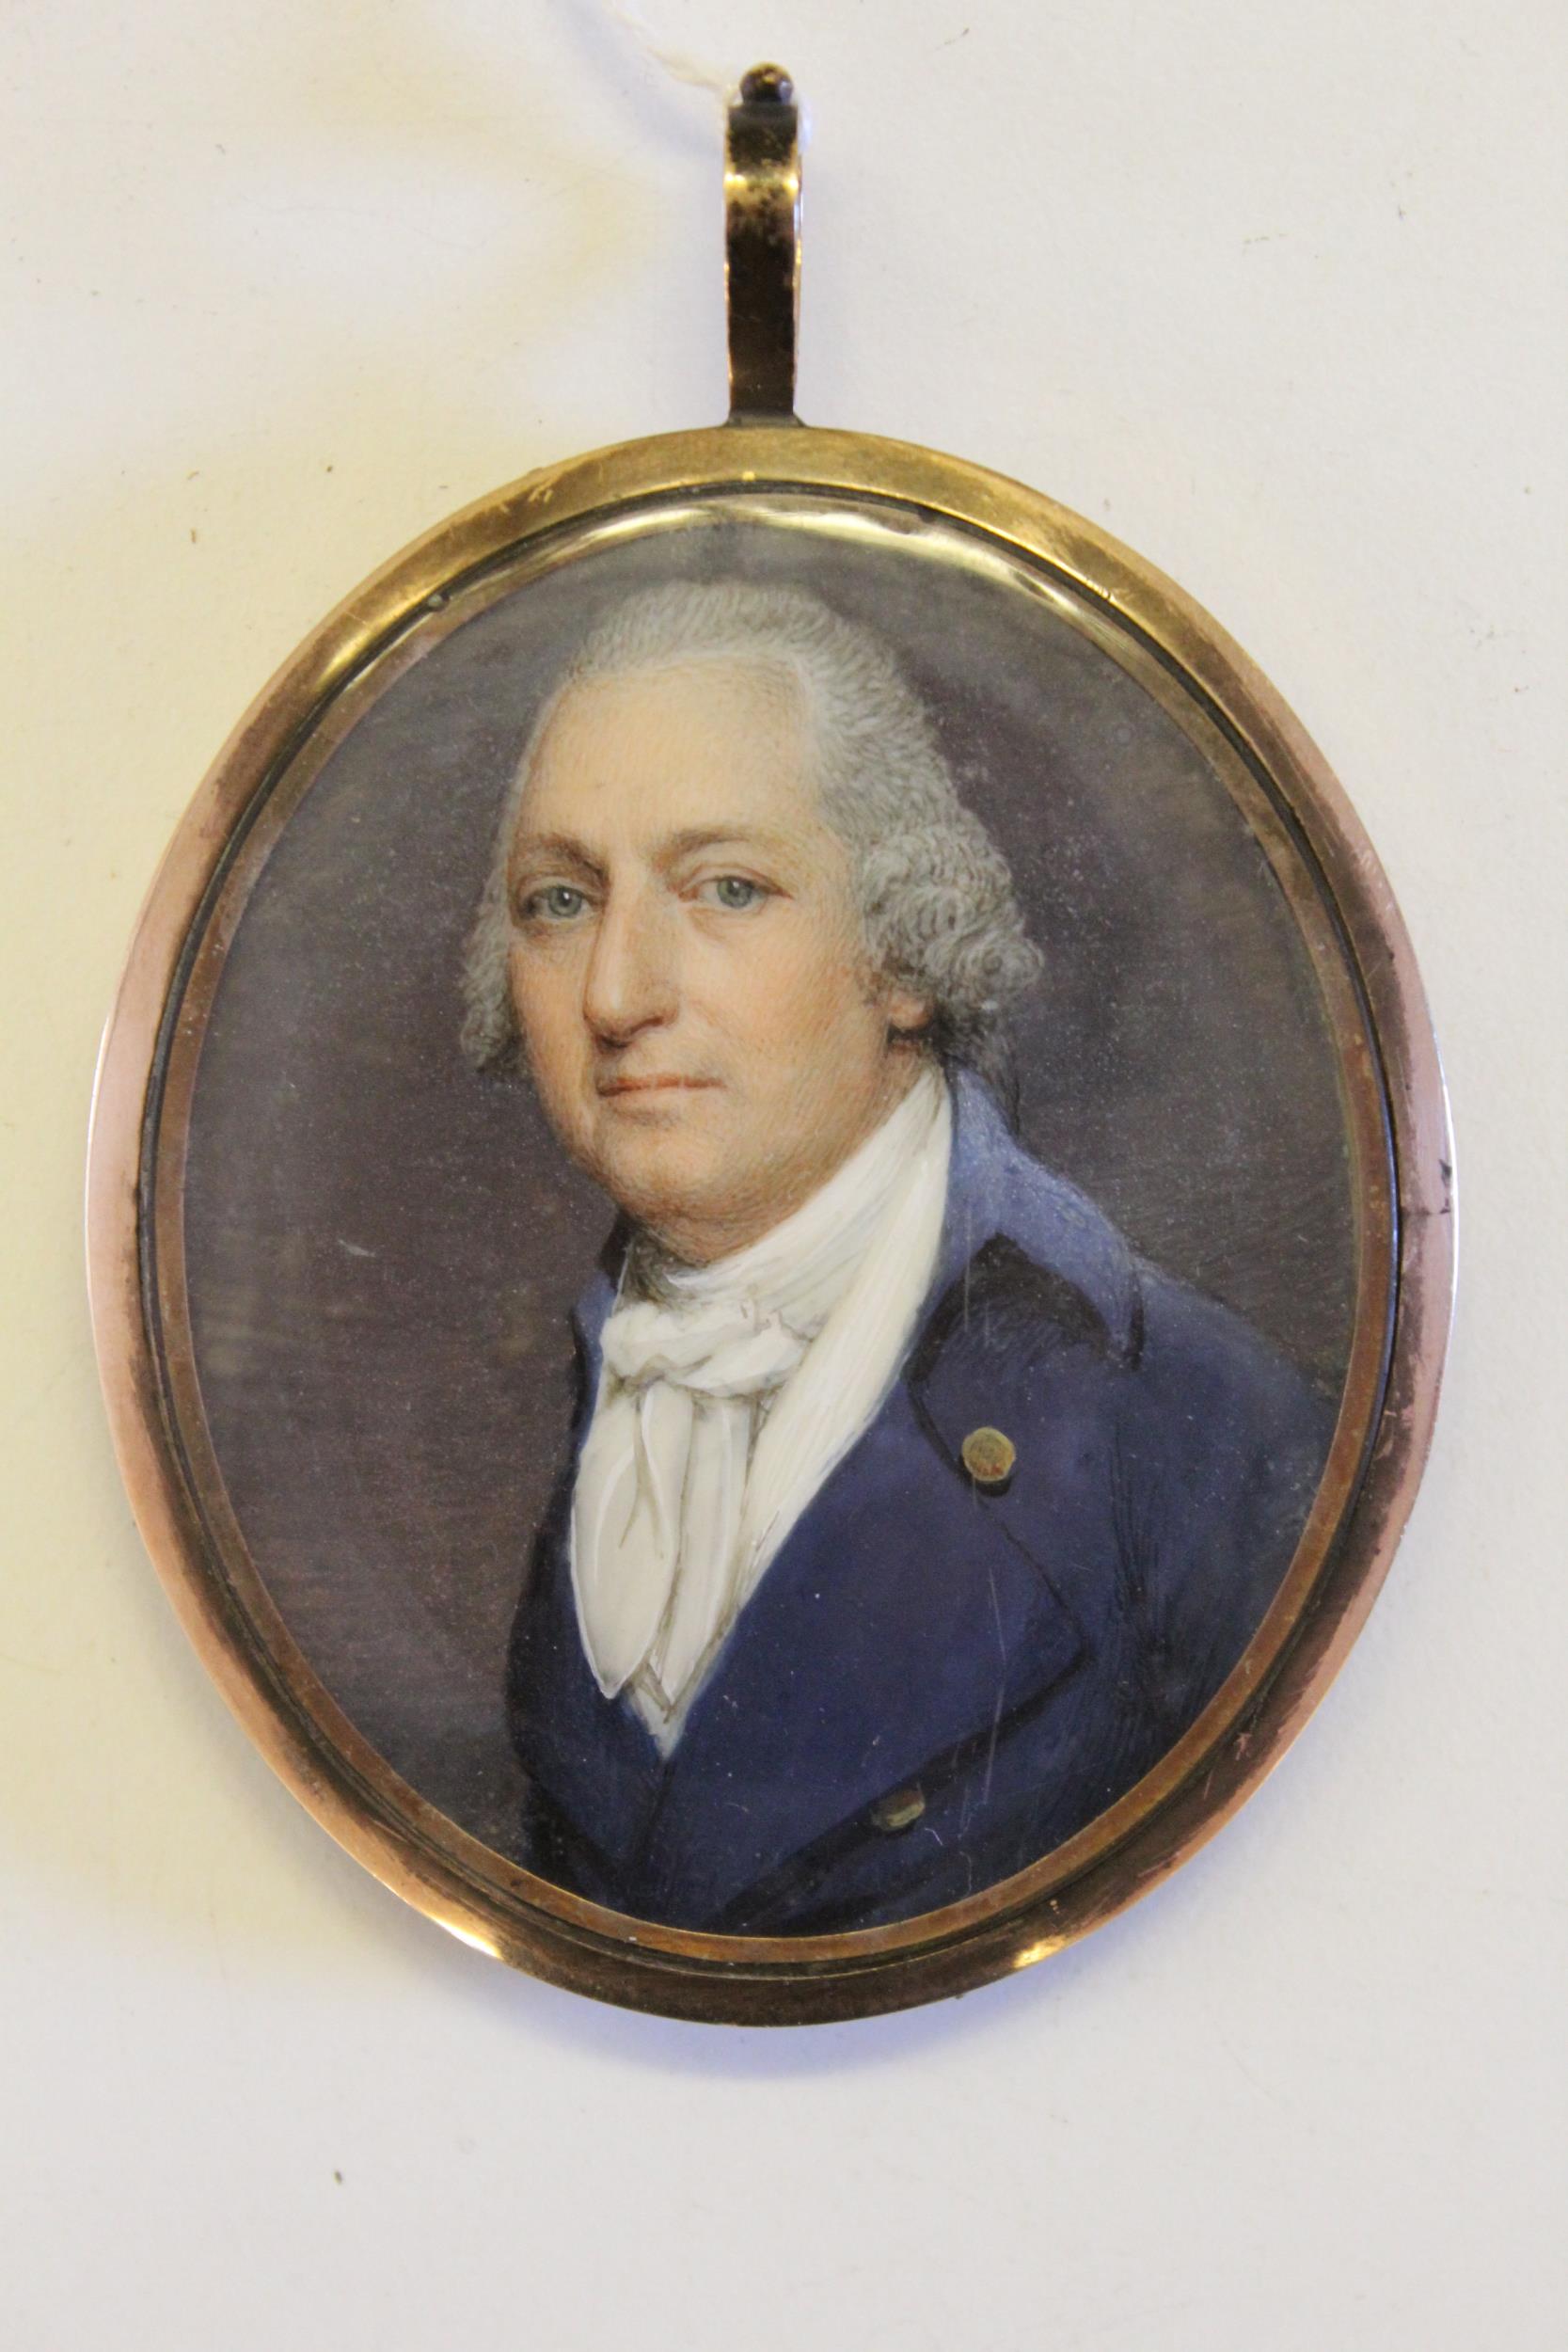 Circle of Thomas Hazlehurst, watercolour portrait miniature of a man wearing a blue coat with gold